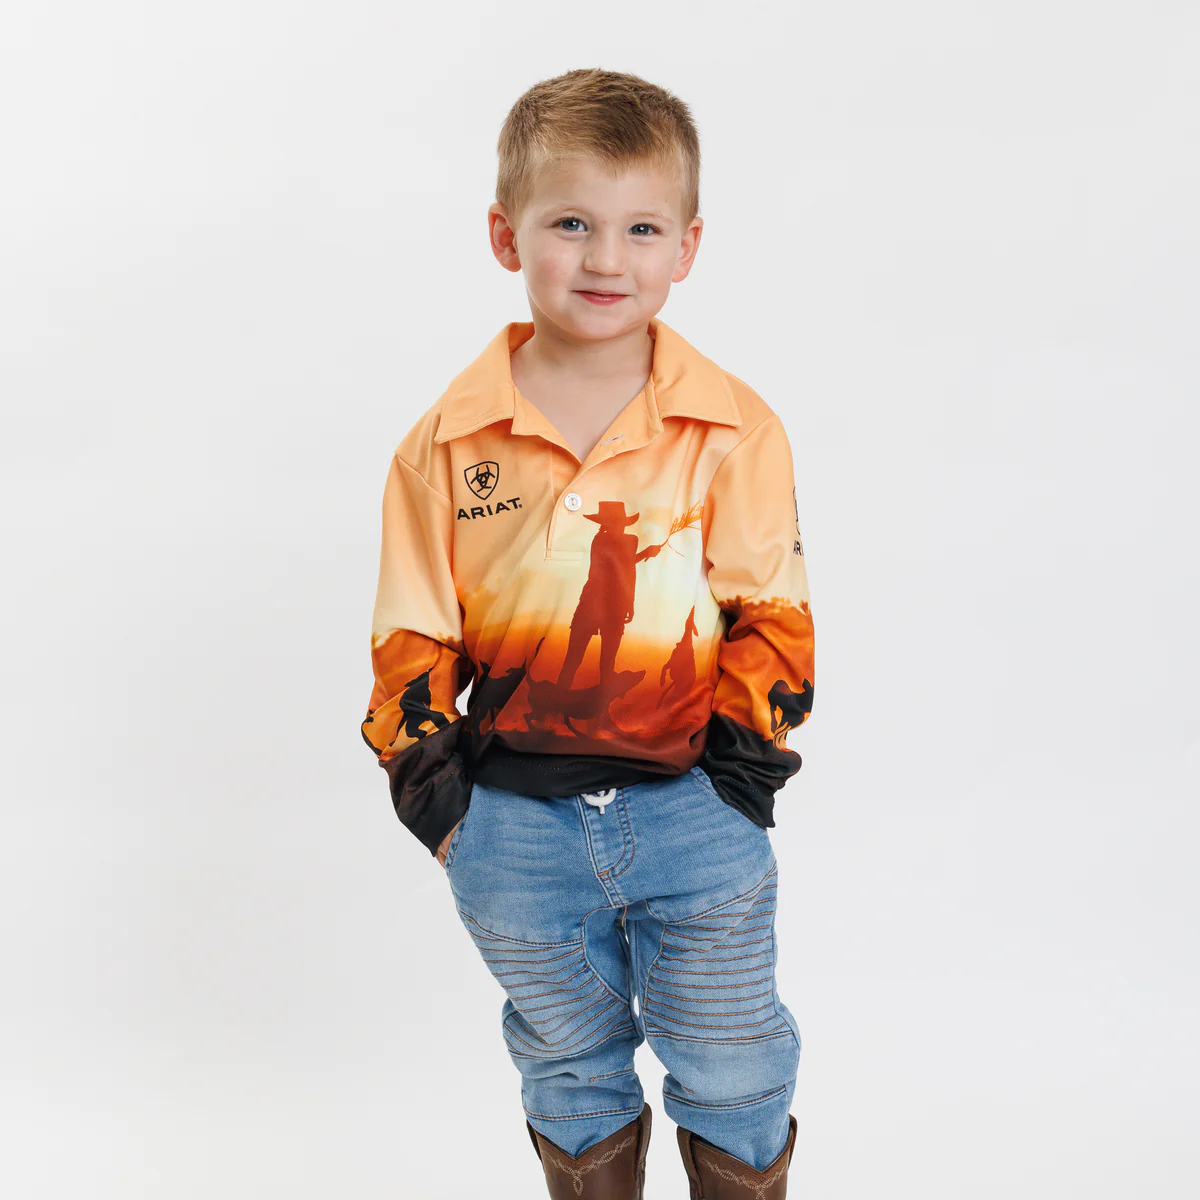 Ariat Boy's Fishing Shirt 'Country Kids' 3003CLSP